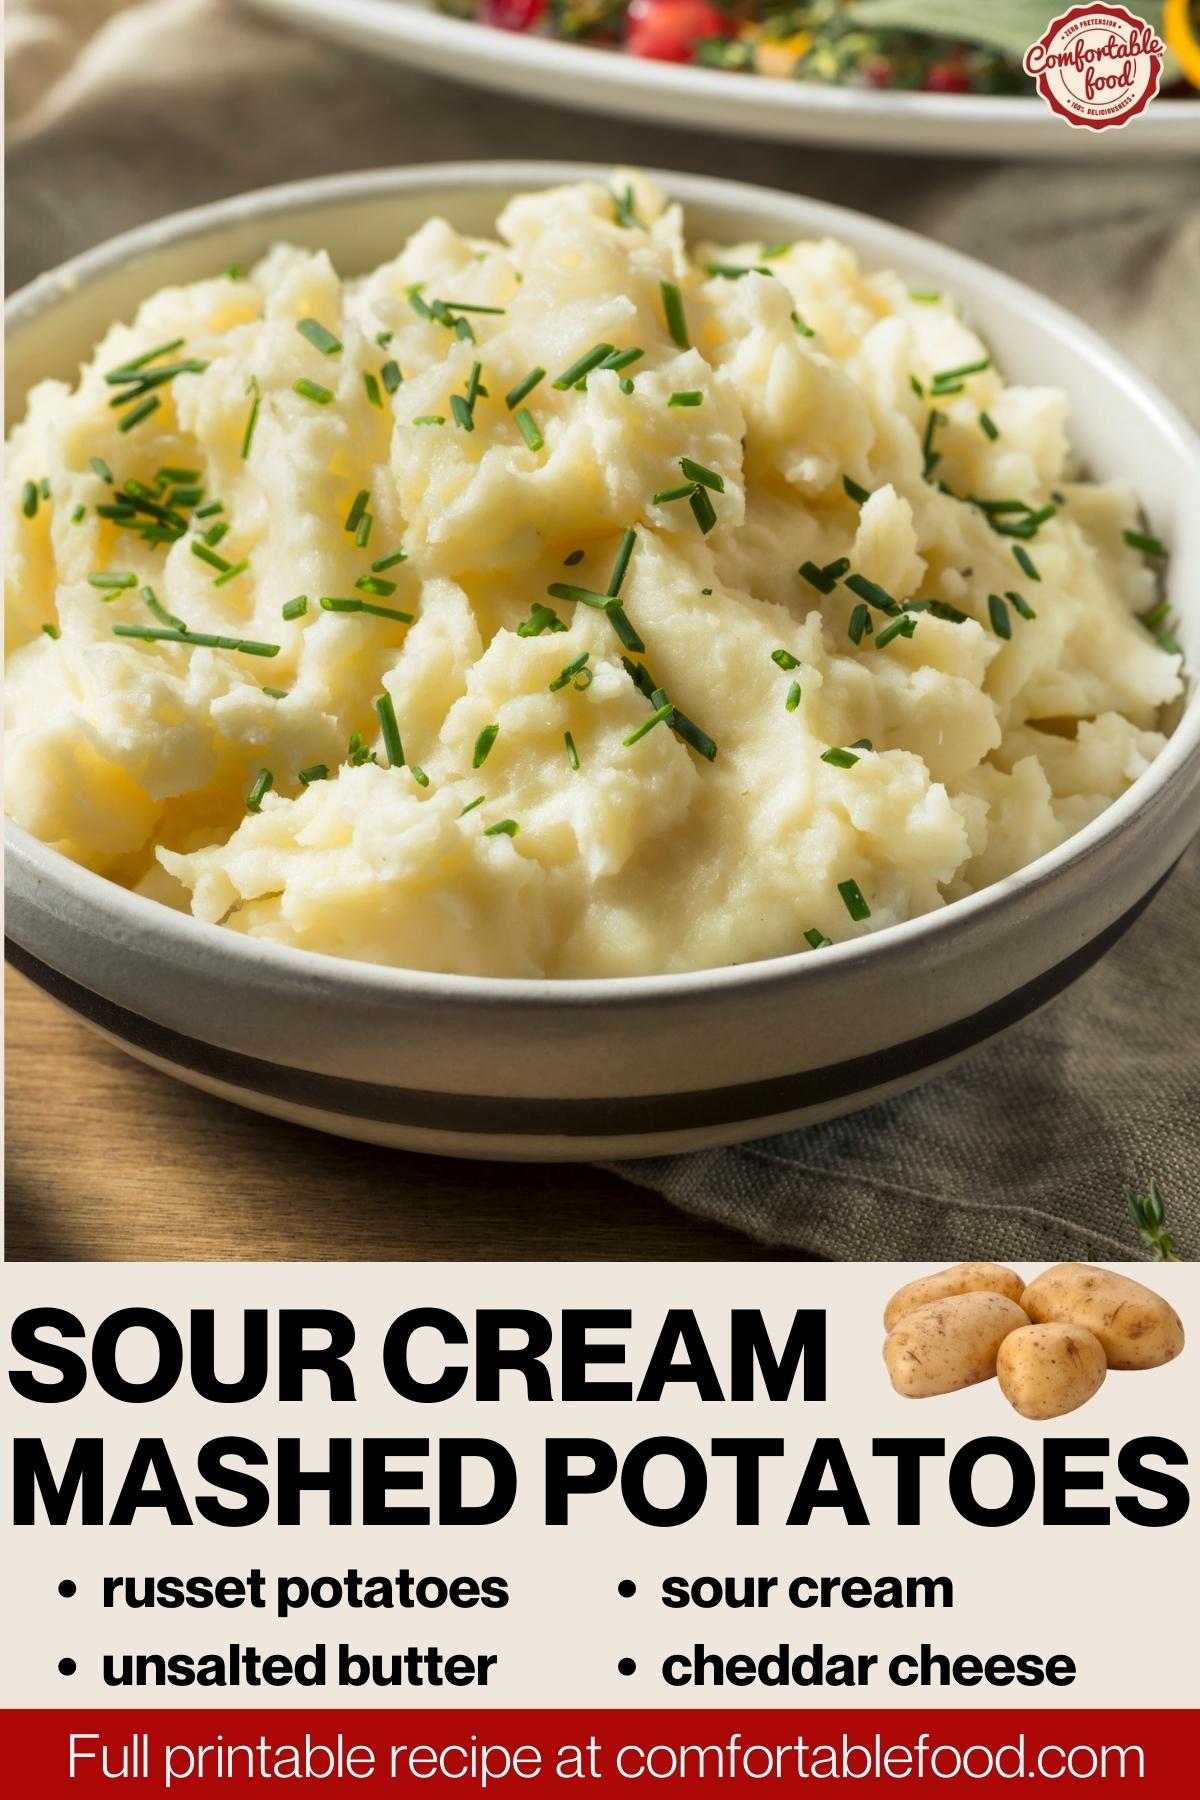 Sour cream mashed potatoes socials 3